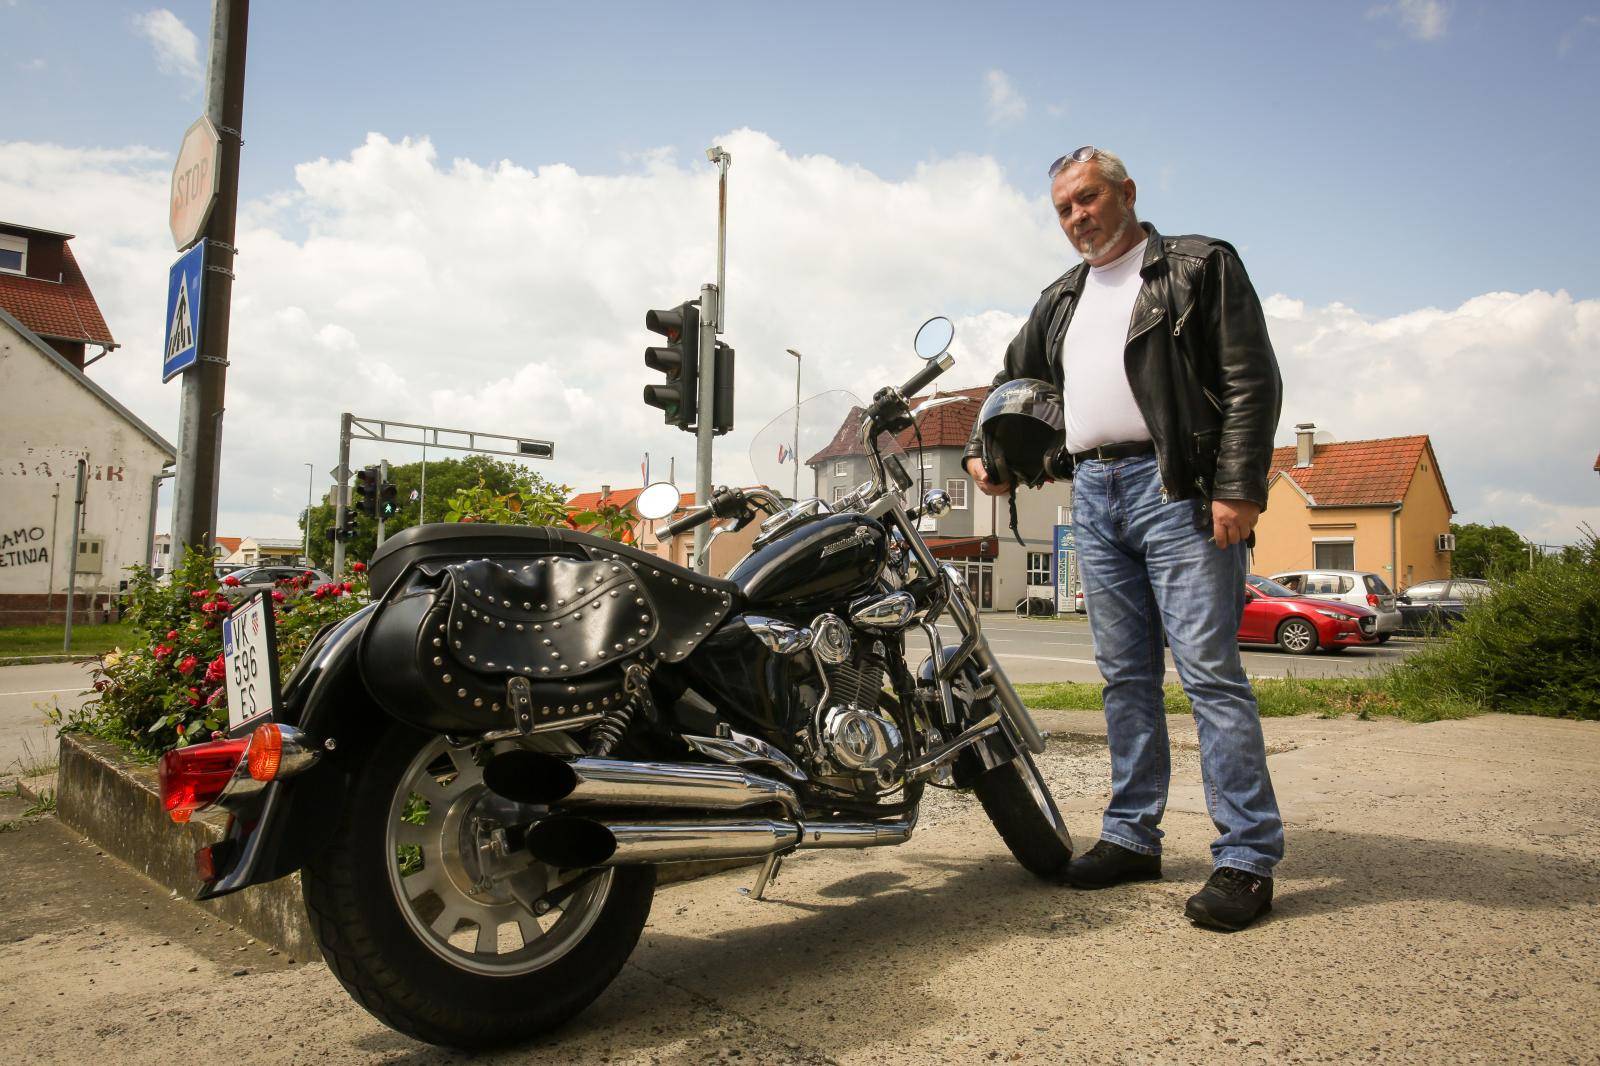 Branitelj pomaže siromašnima: 'Prodat ću svoj motocikl da 35 djece iz Vukovara ode na more'